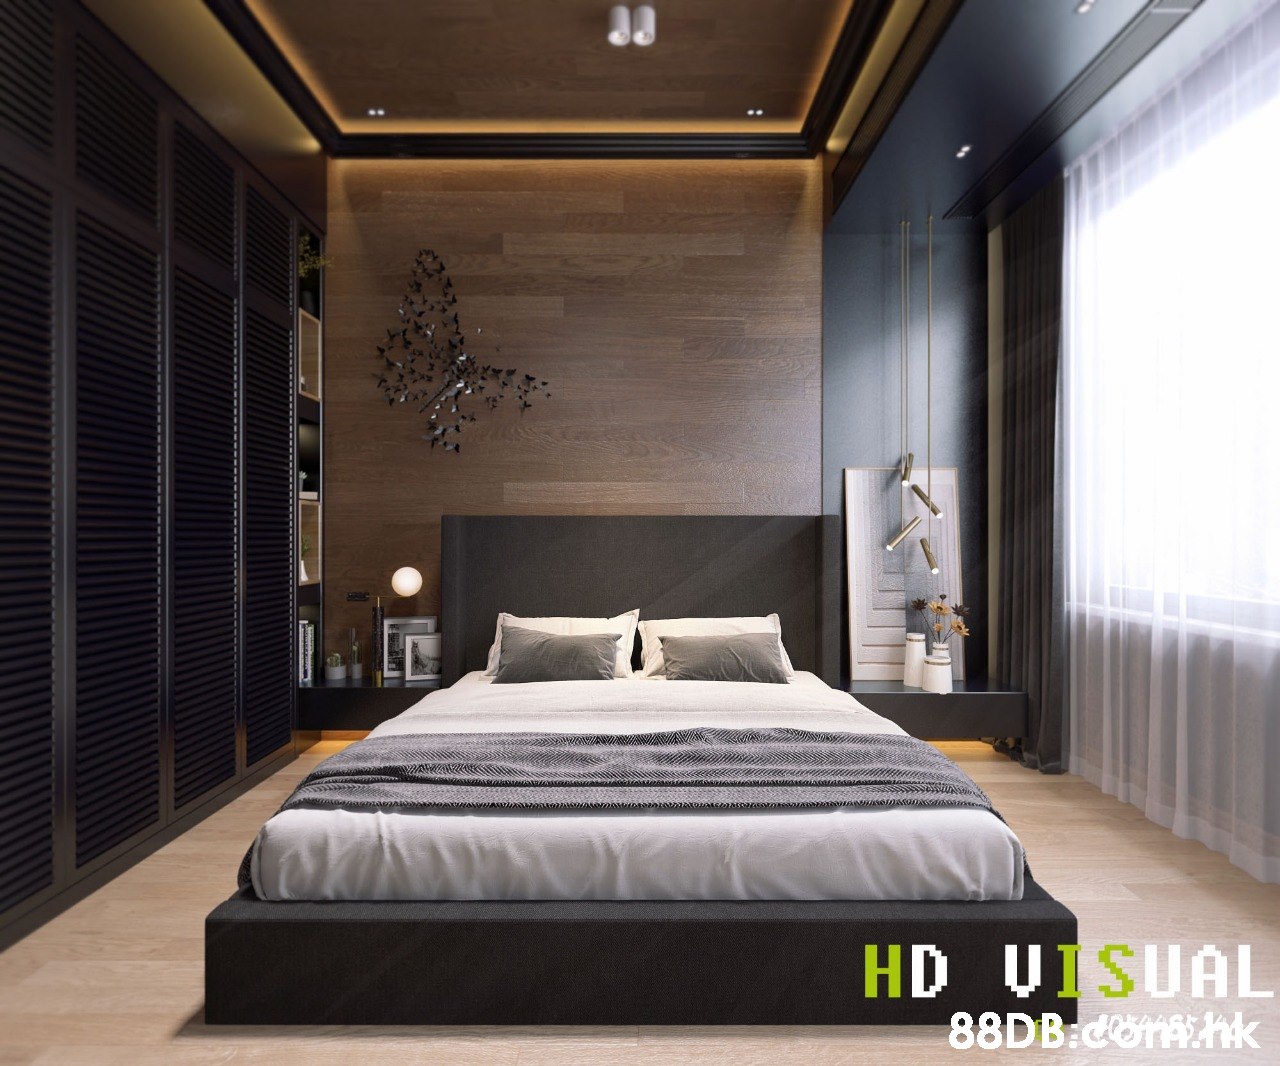 HD UISUAL 88DBacomhk  Bedroom,Bed,Interior design,Room,Furniture